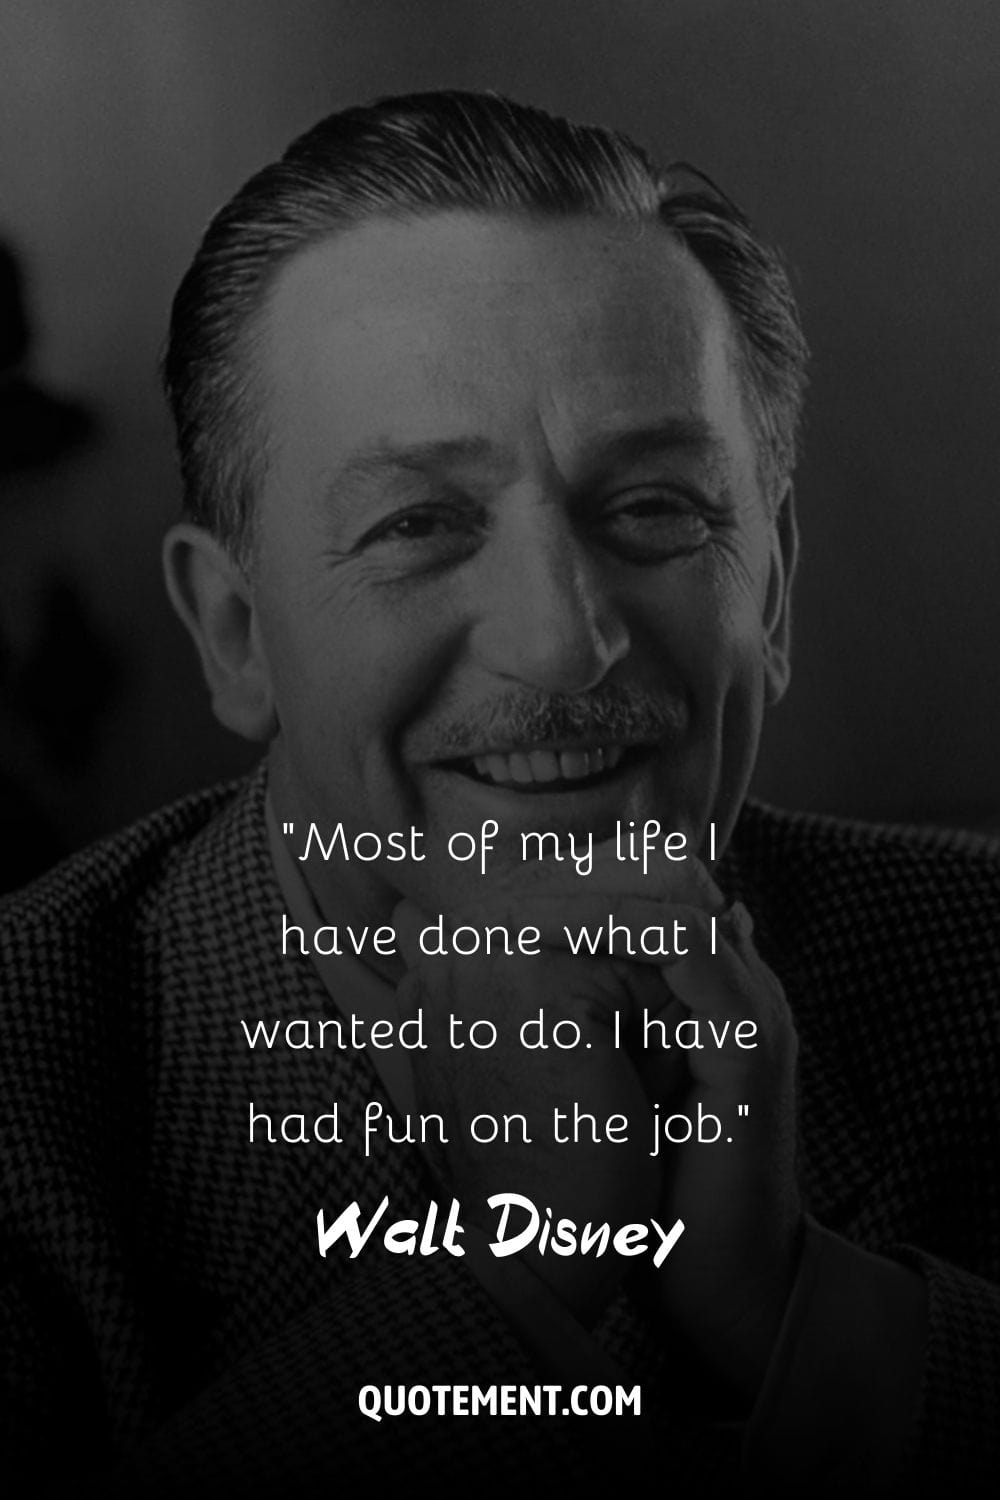 Portrait of a genius Walt Disney's joyful charisma.